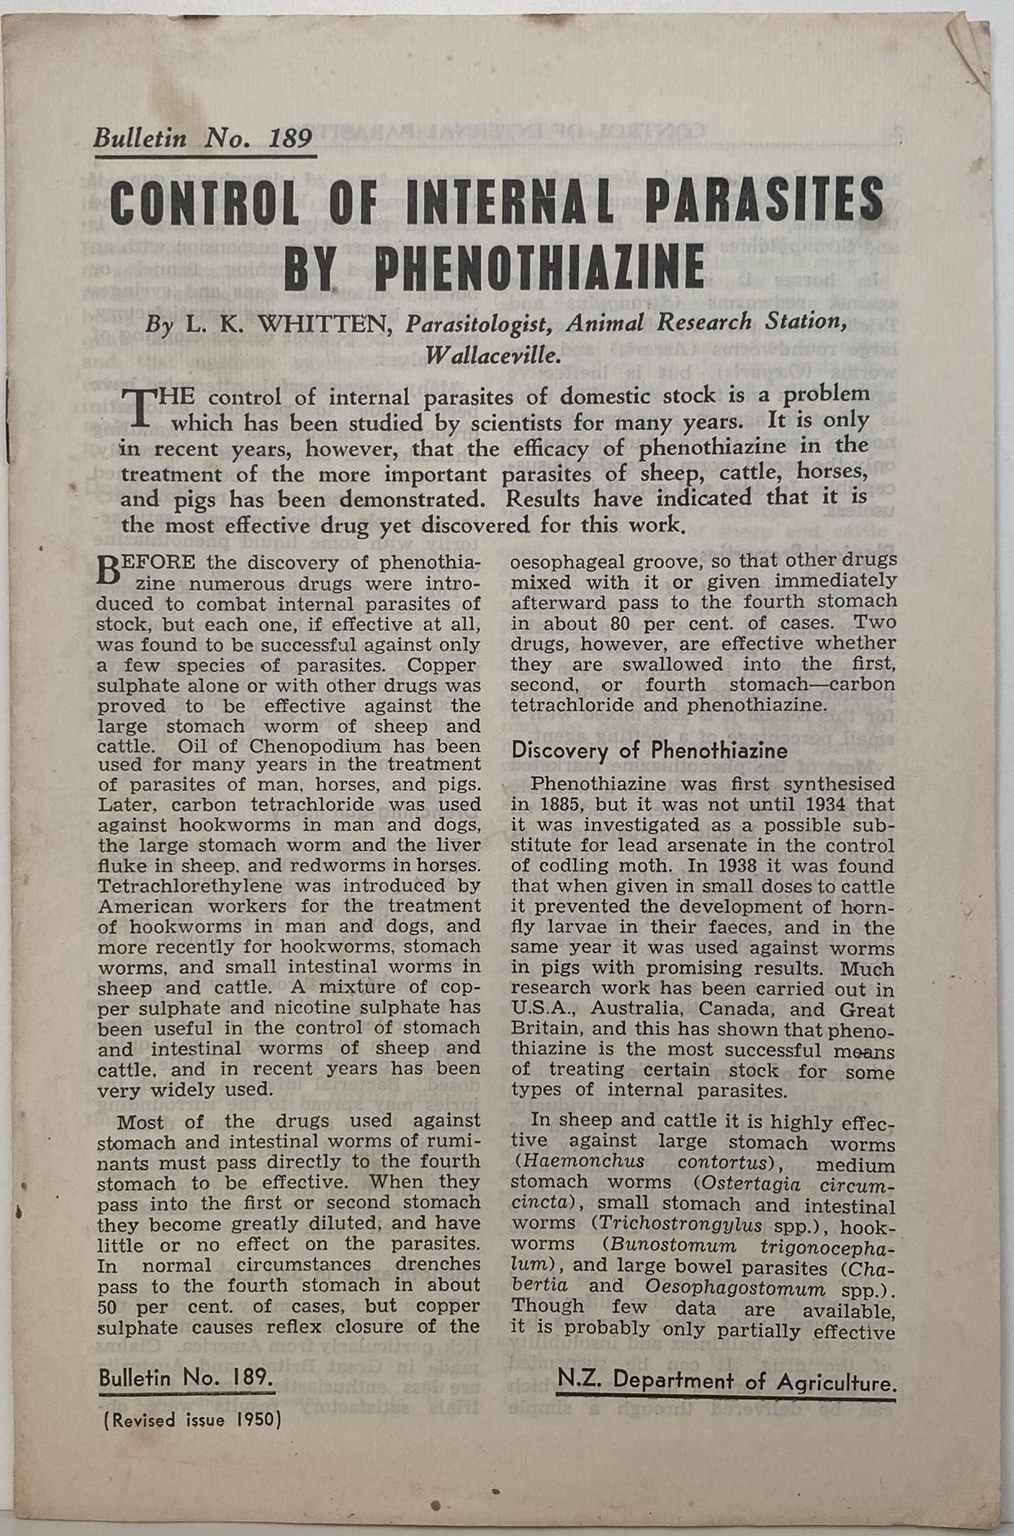 CONTROL of INTERNAL PARASITES by PHENOTHIAZINE: Bulletin No. 189